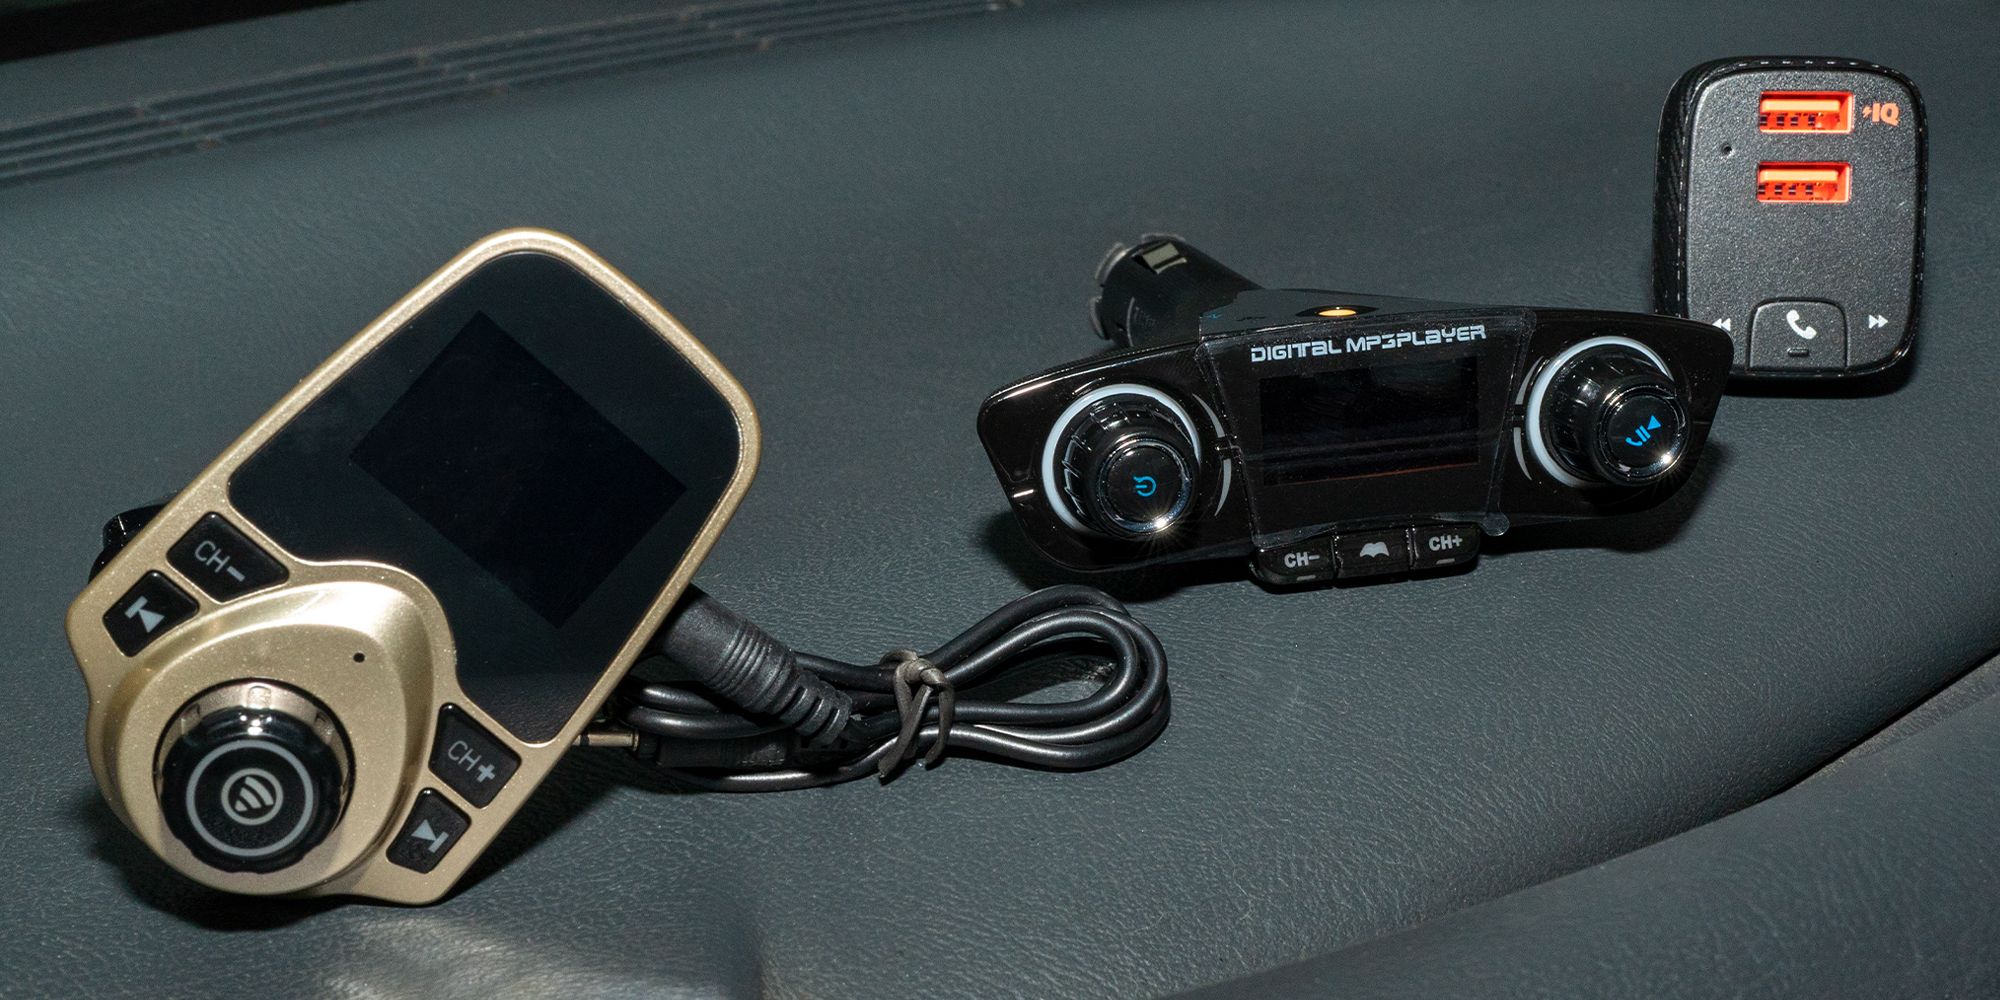 Best BluetoothFM Transmitters of 2022 | Car Radio Adapter Reviews